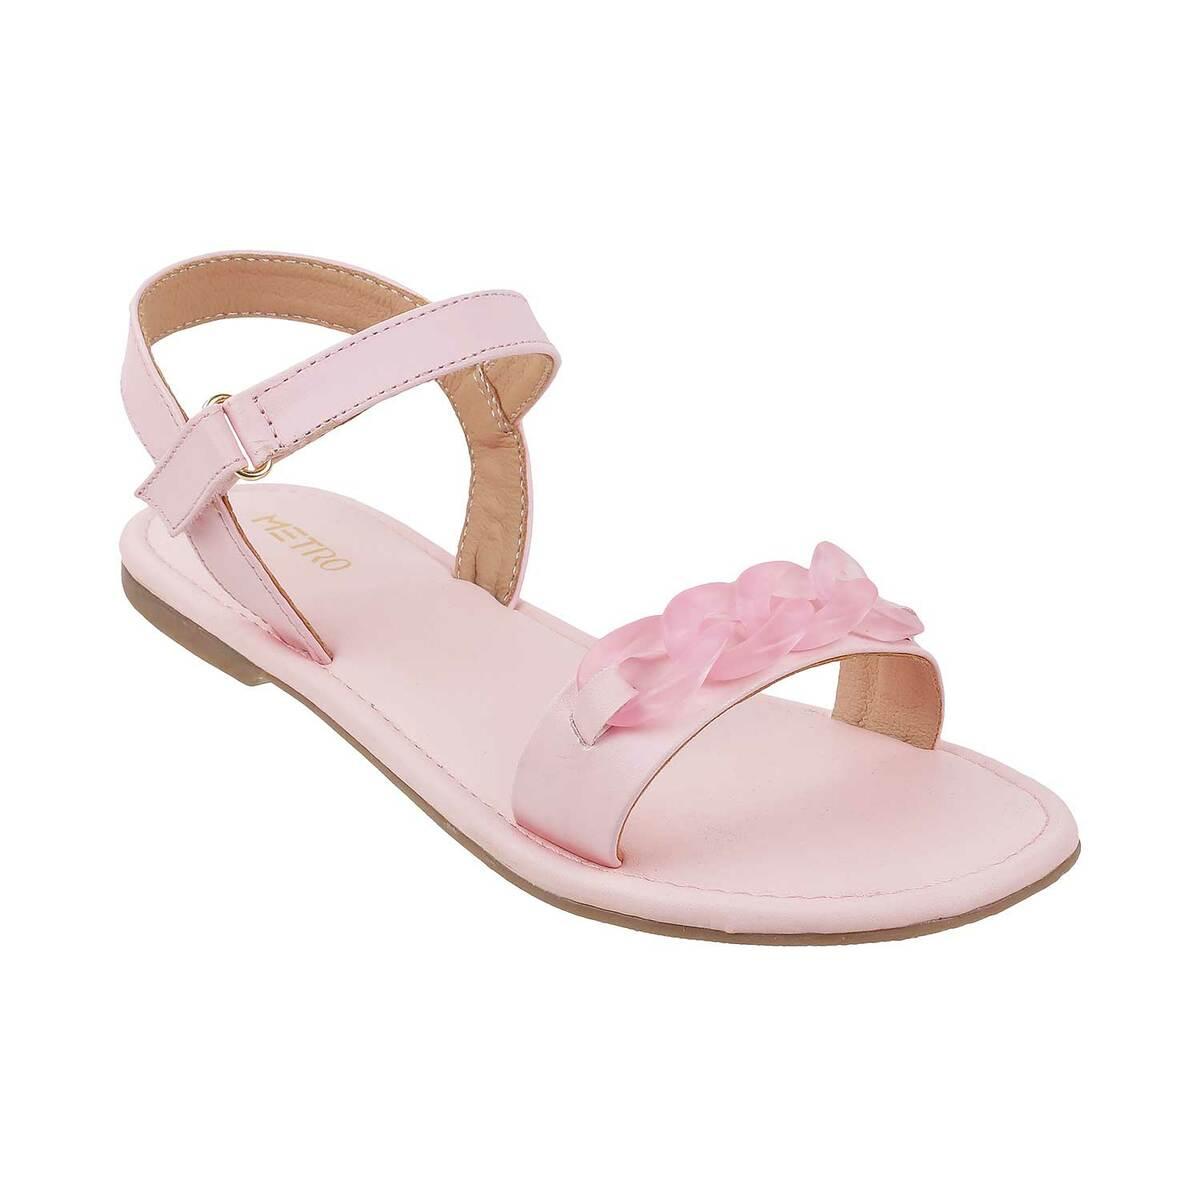 Buy Blue Flat Sandals for Women by Metro Online | Ajio.com